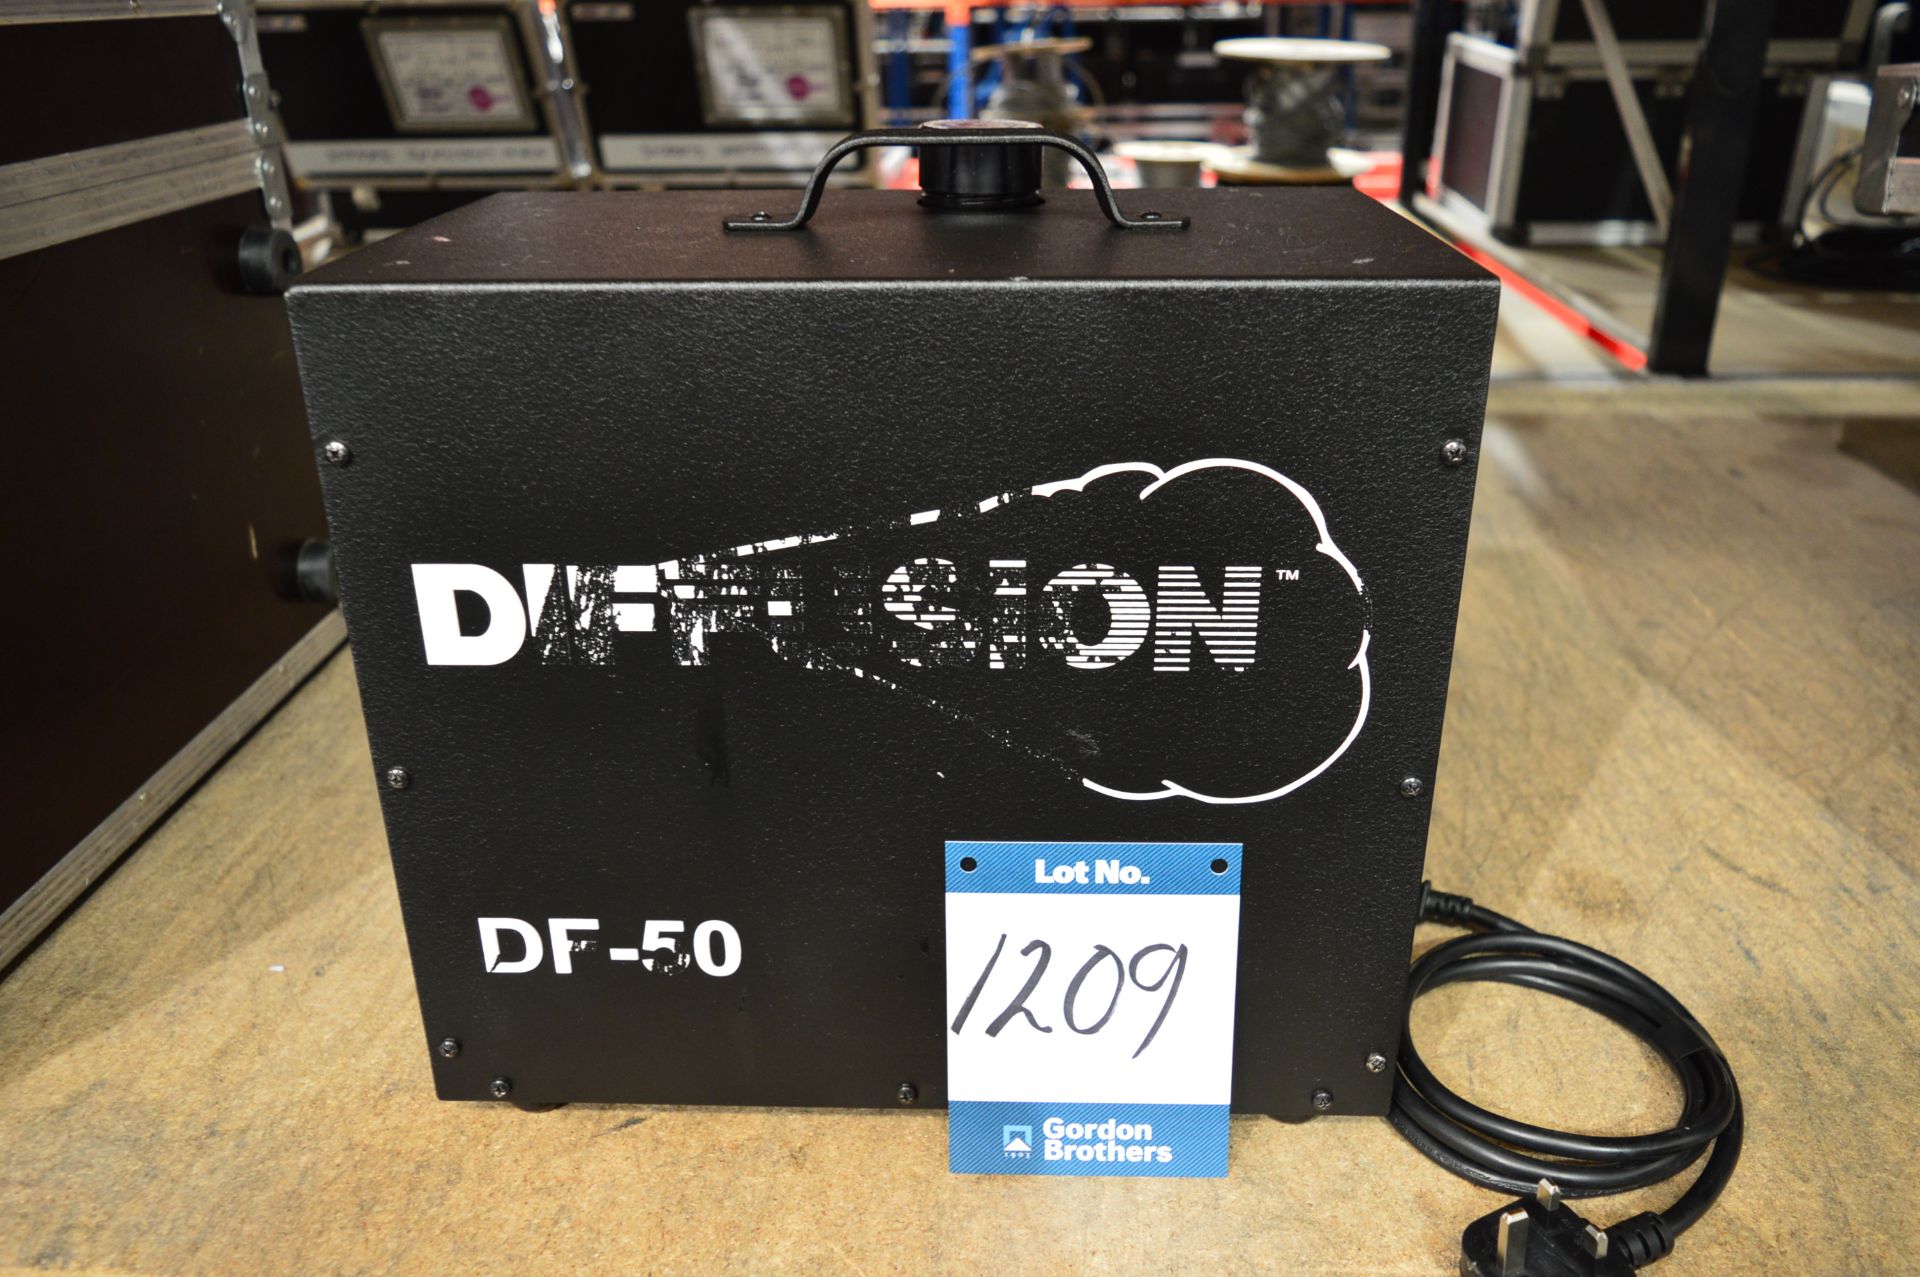 Diffusion, DF-50 professional haze machine with po